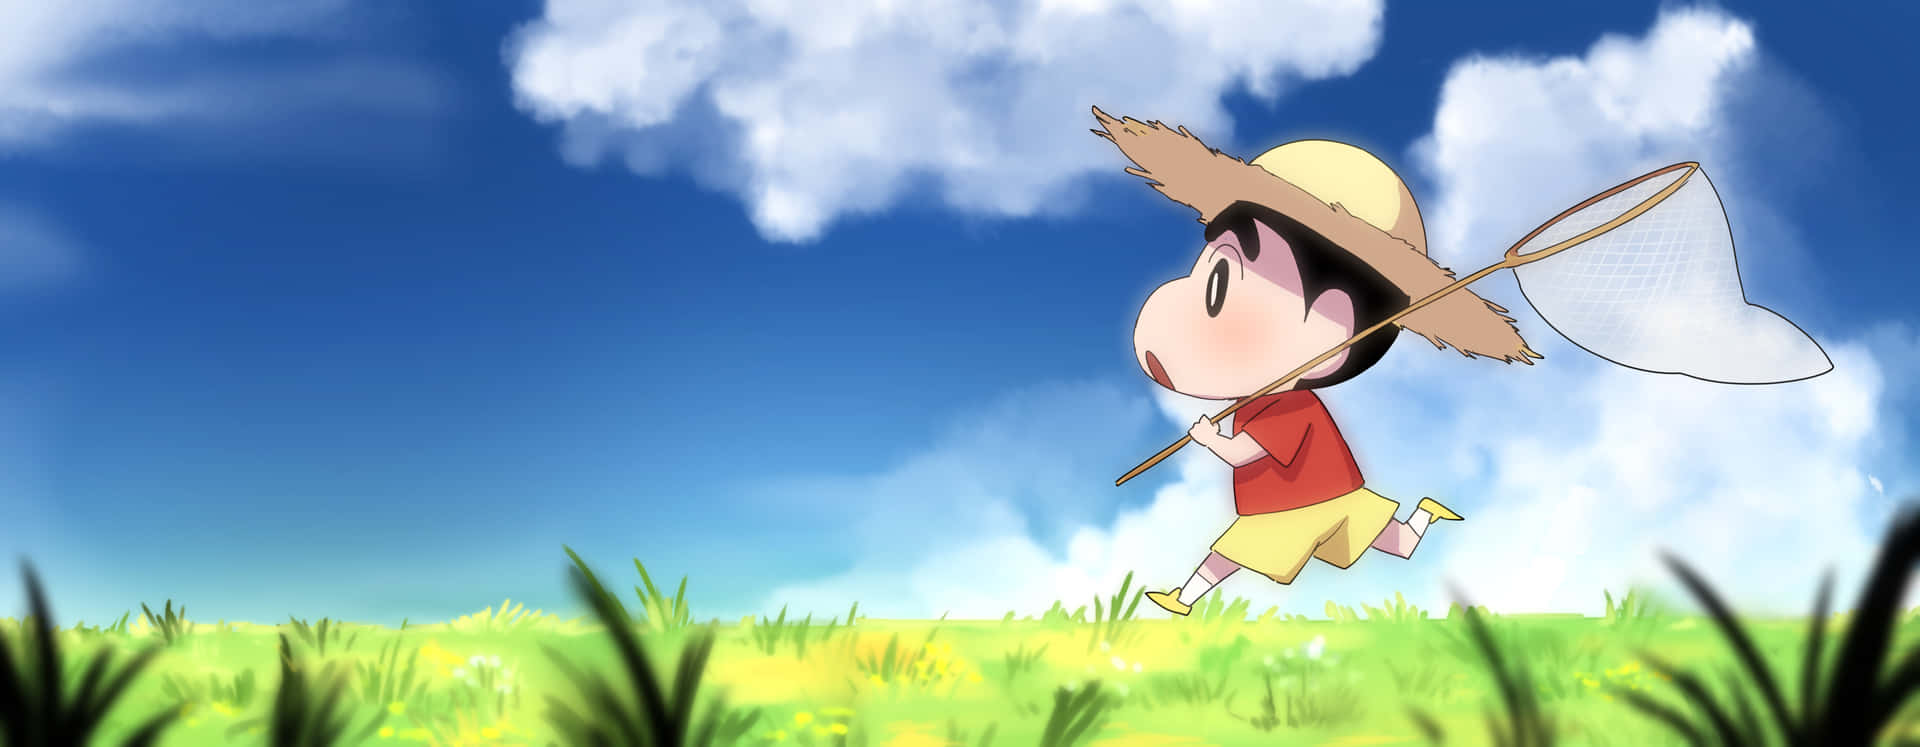 A Cartoon Boy Is Walking Through A Field With A Net